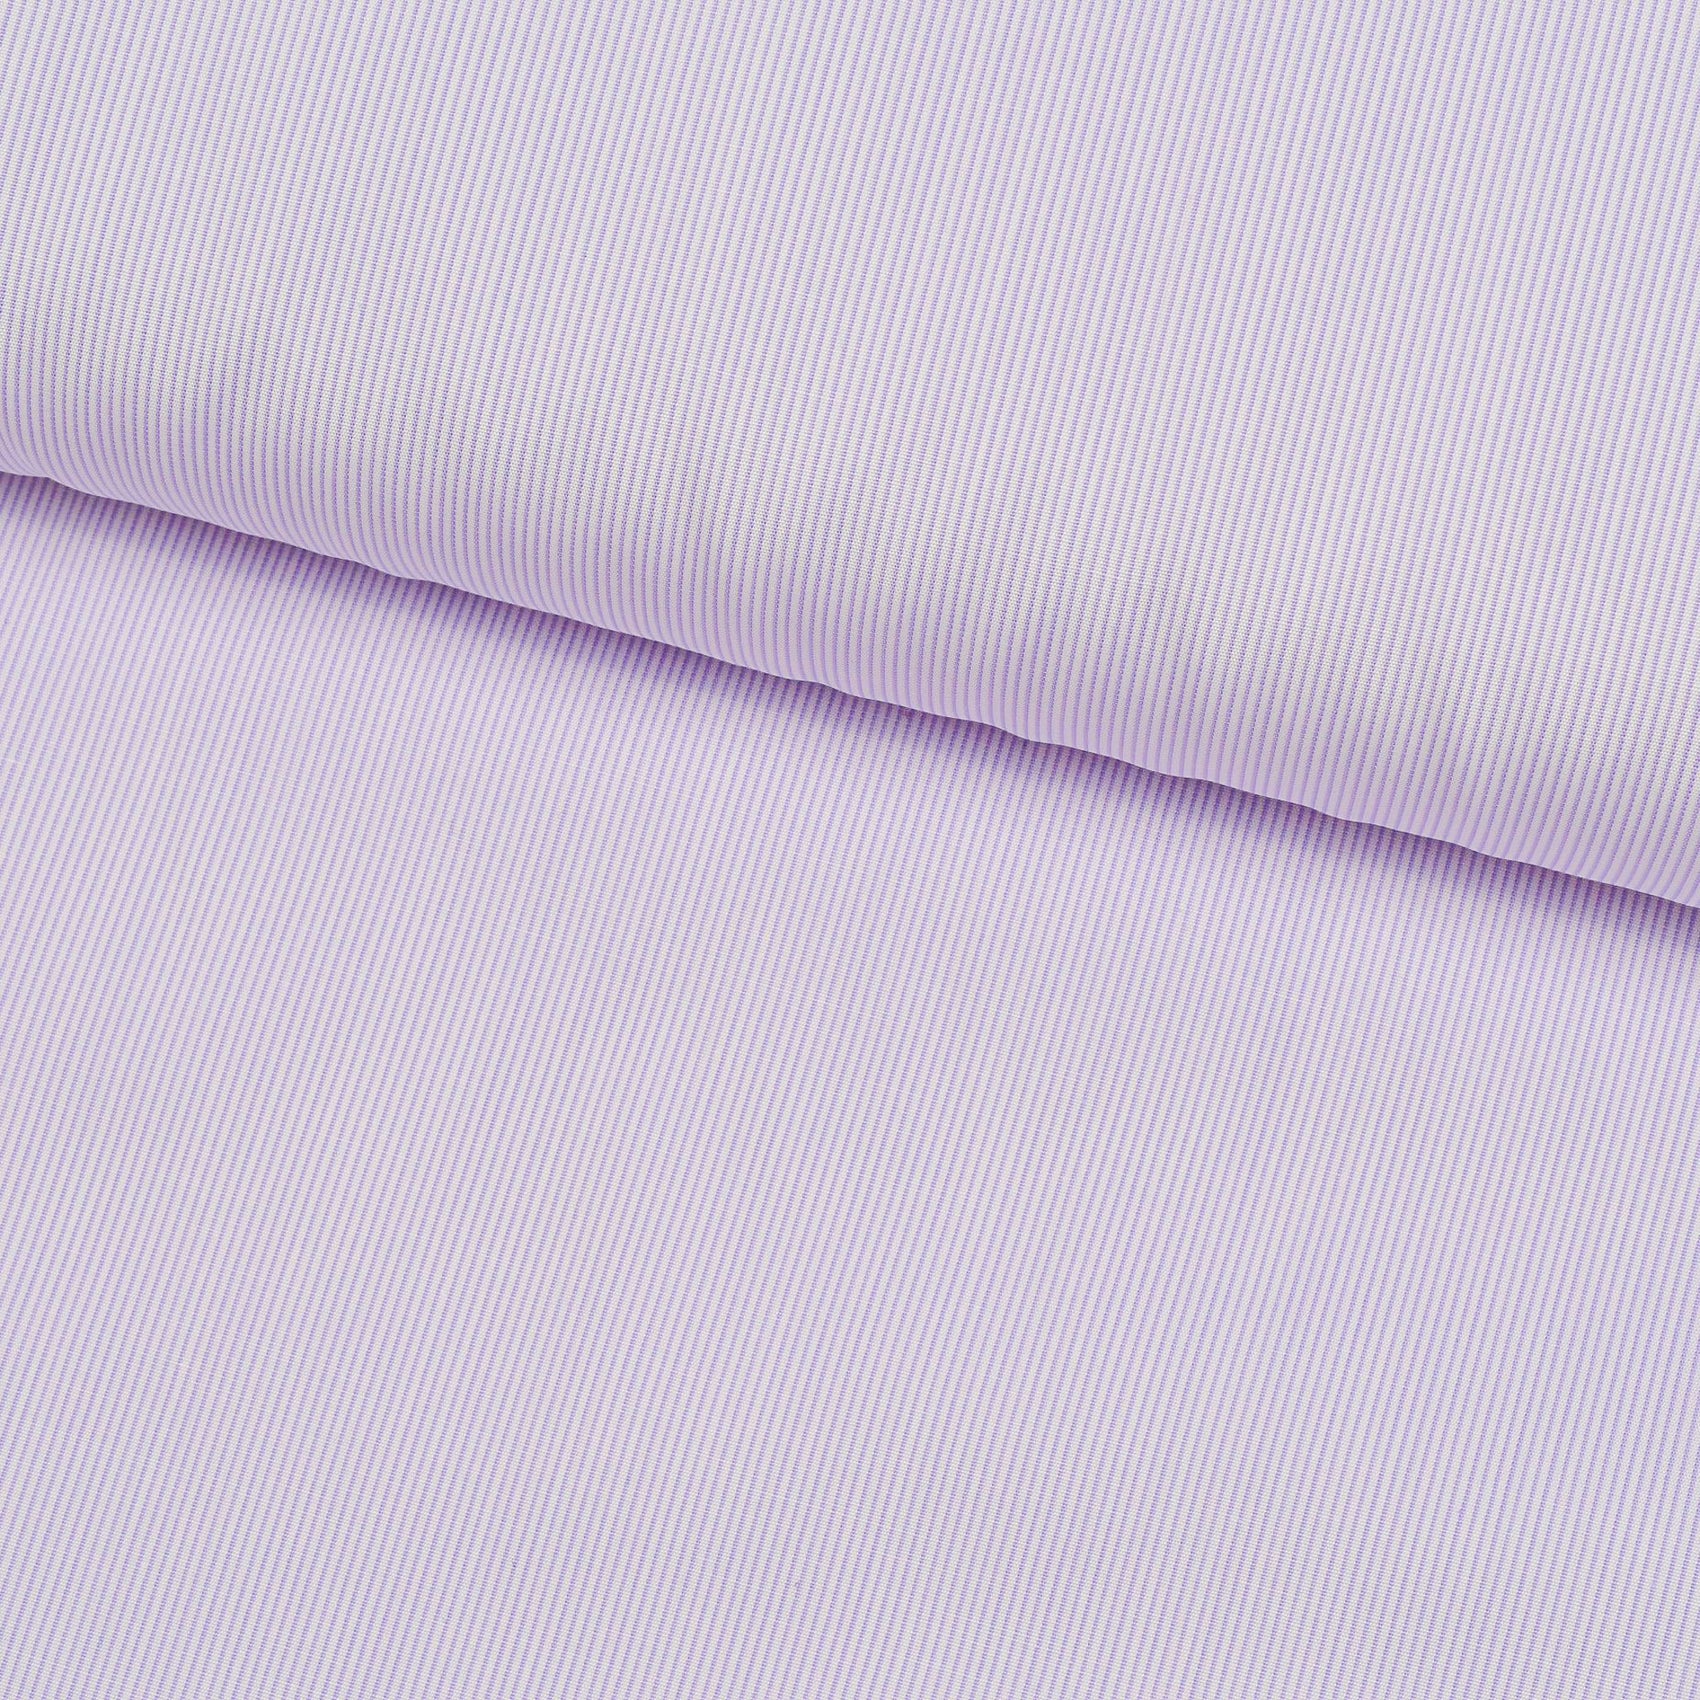 Boeing Fine Stripe Pale Violet Poplin Cotton Shirt